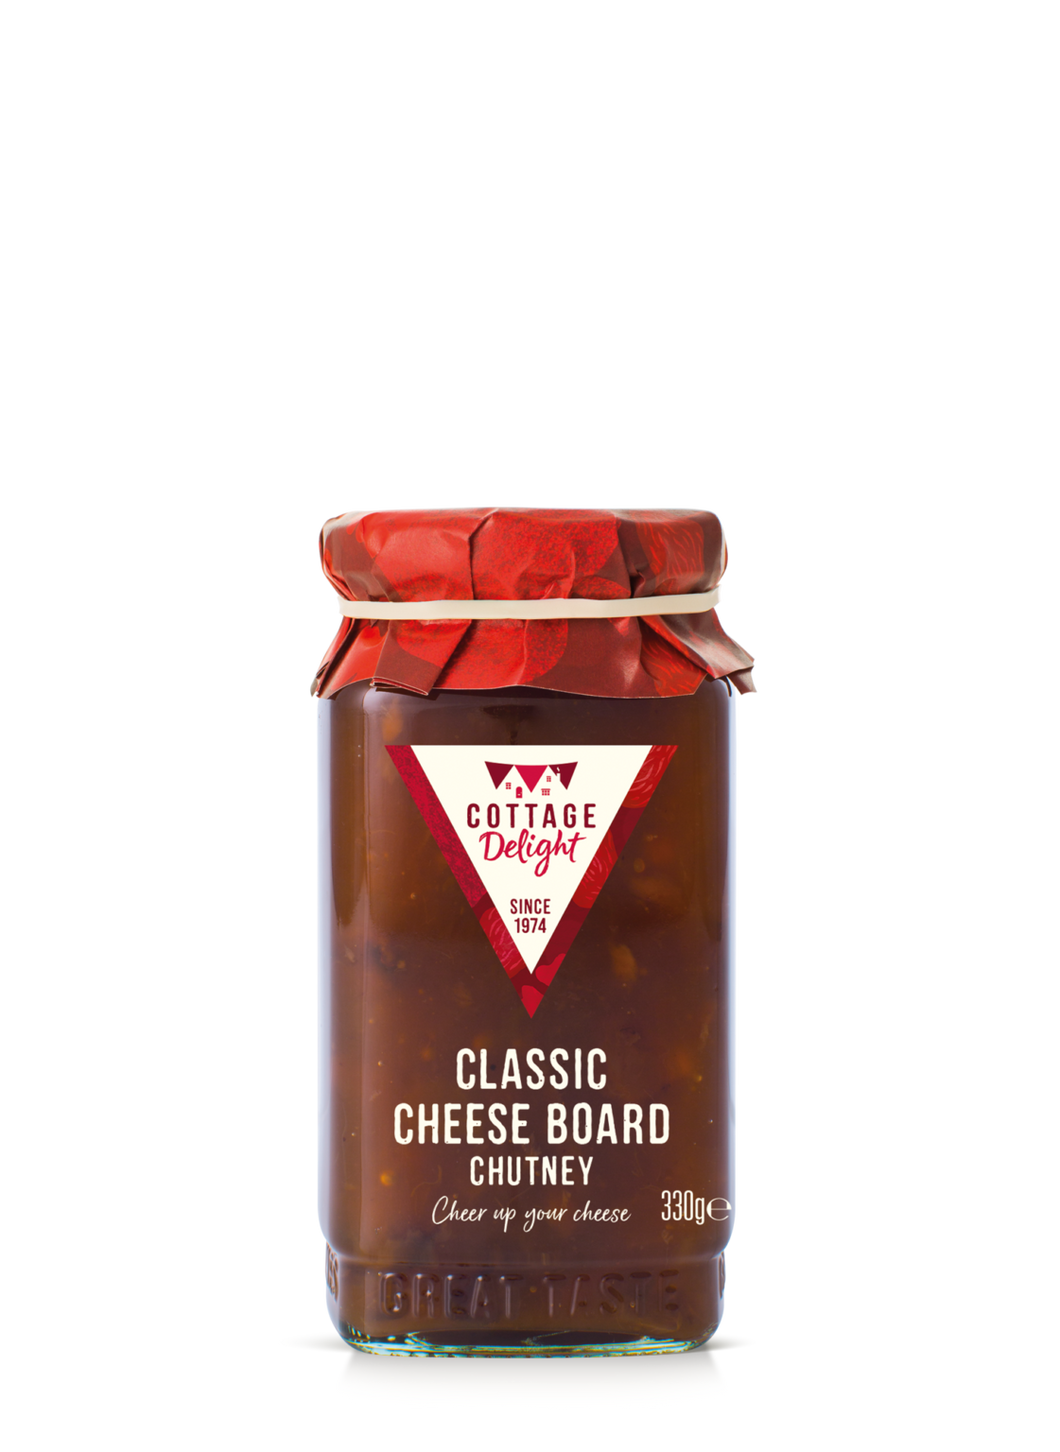 Classic Cheese Board Chutney